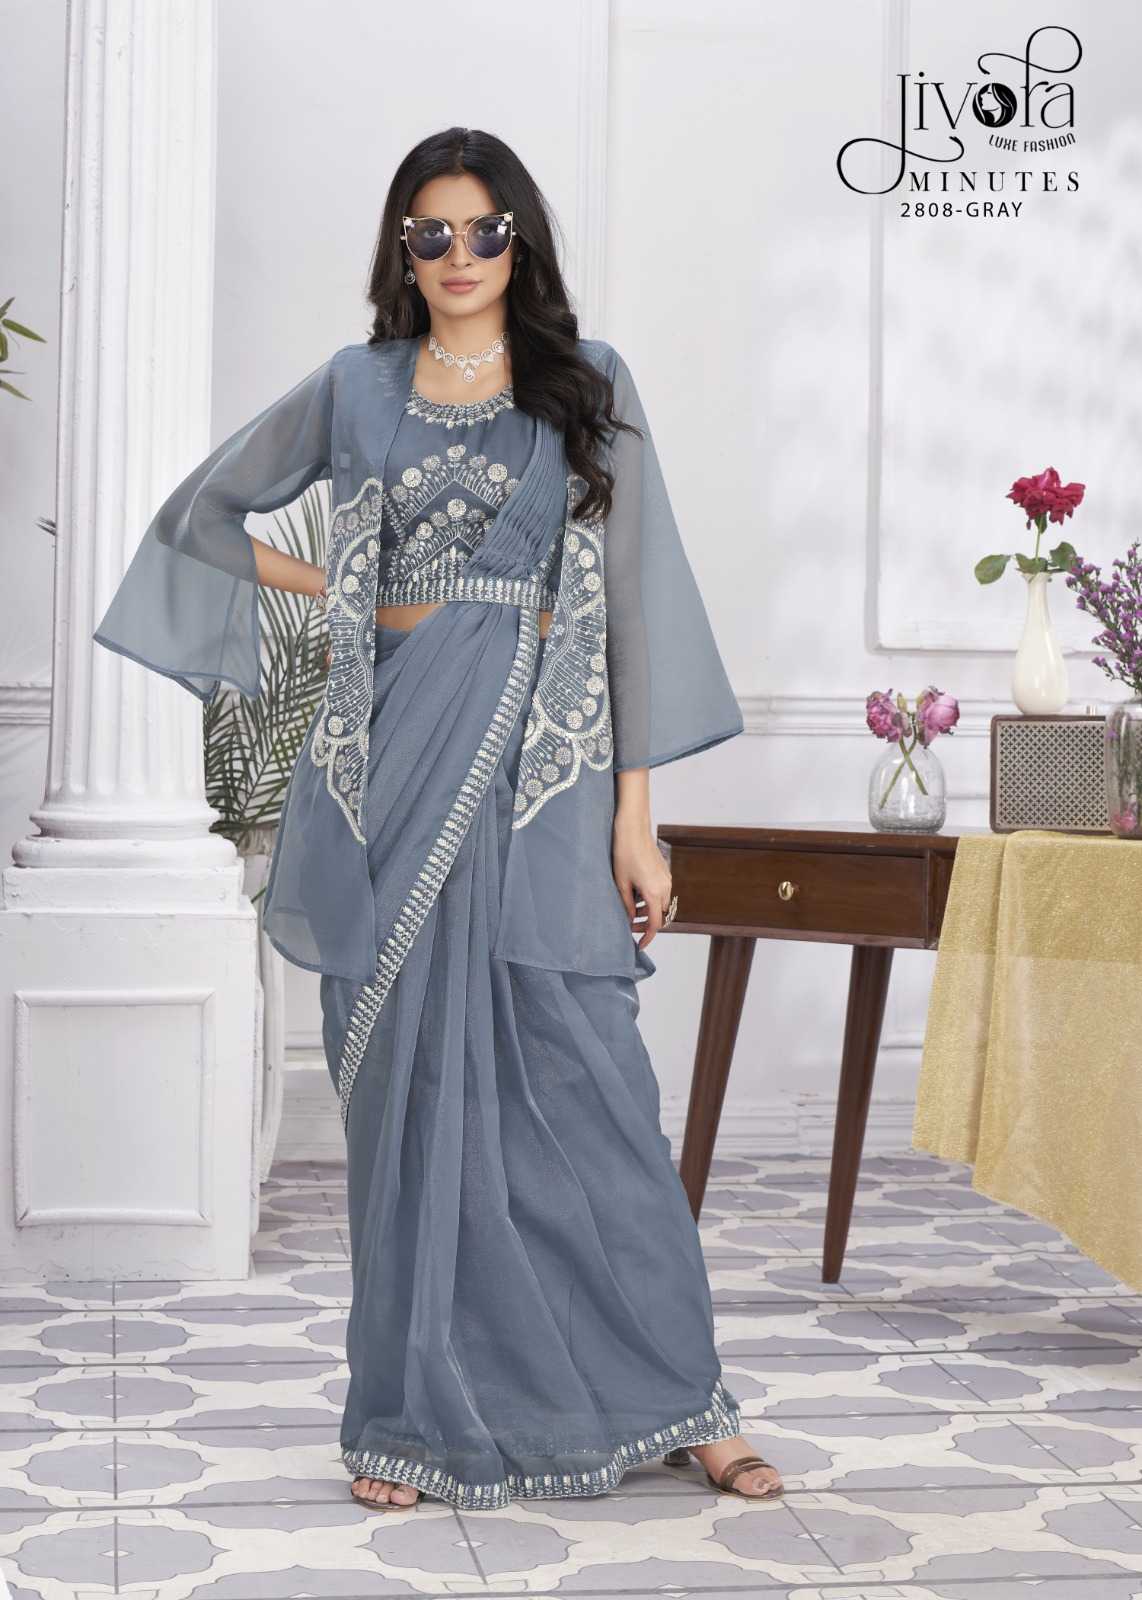 jivora minutes exclusive premium georgette embroidery work stylish indian drape sarees 